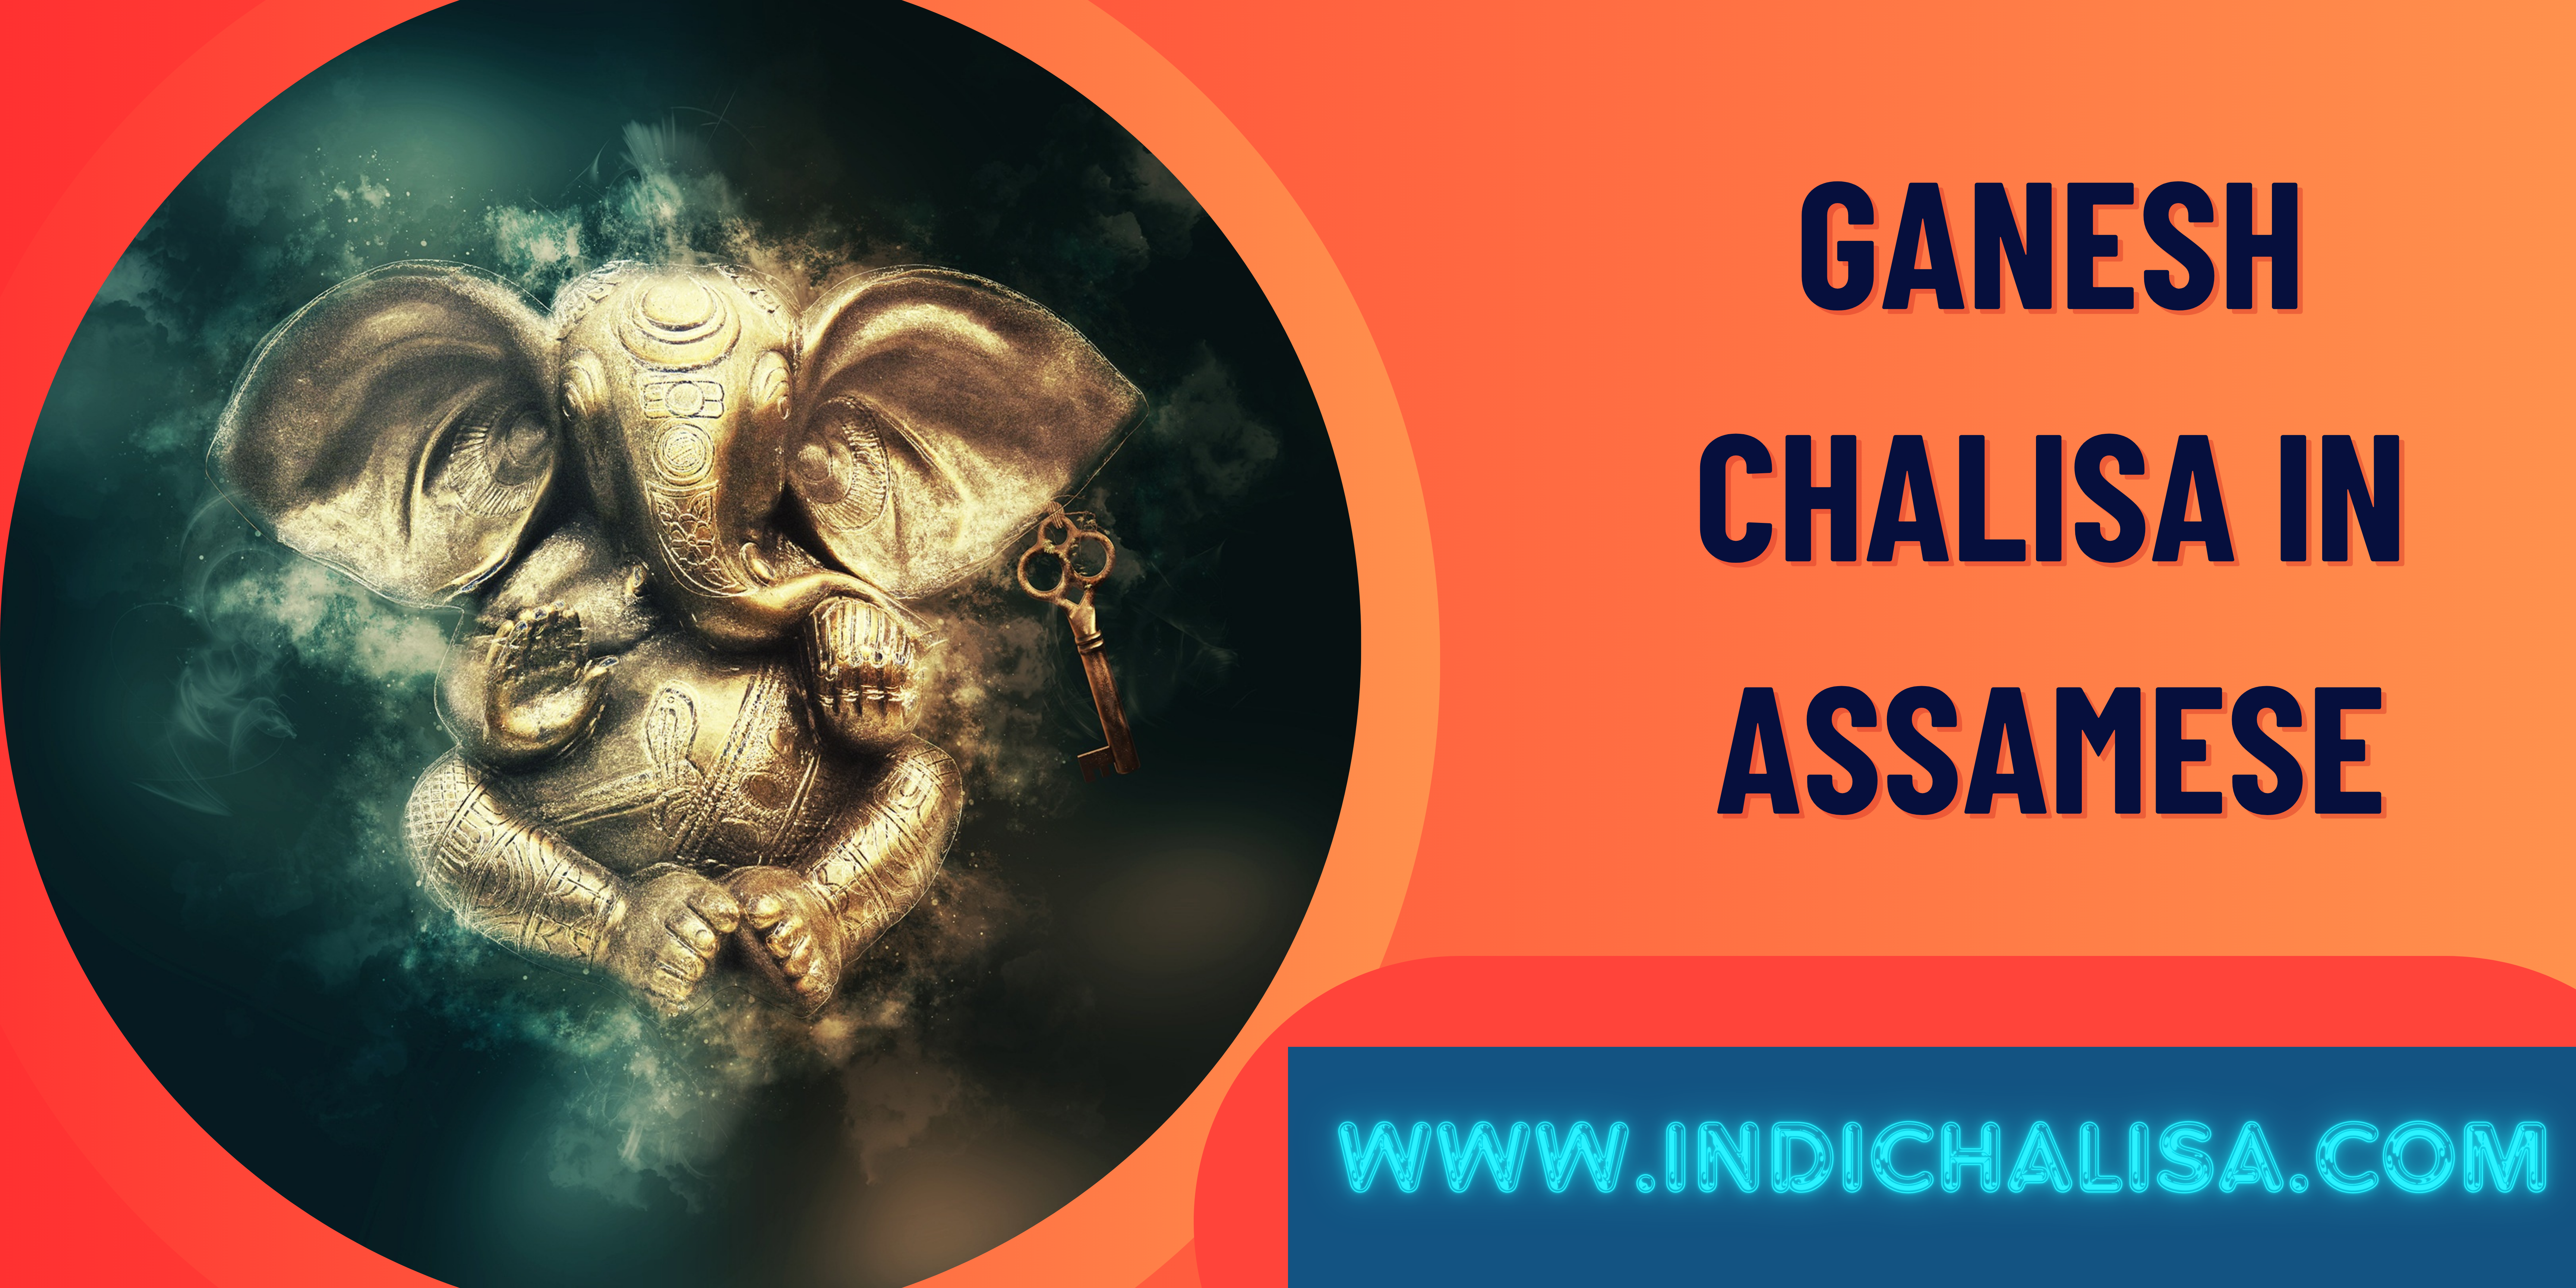 Ganesh Chalisa In Assamese|Ganesh Chalisa In Assamese|Indichalisa|Indichalisa